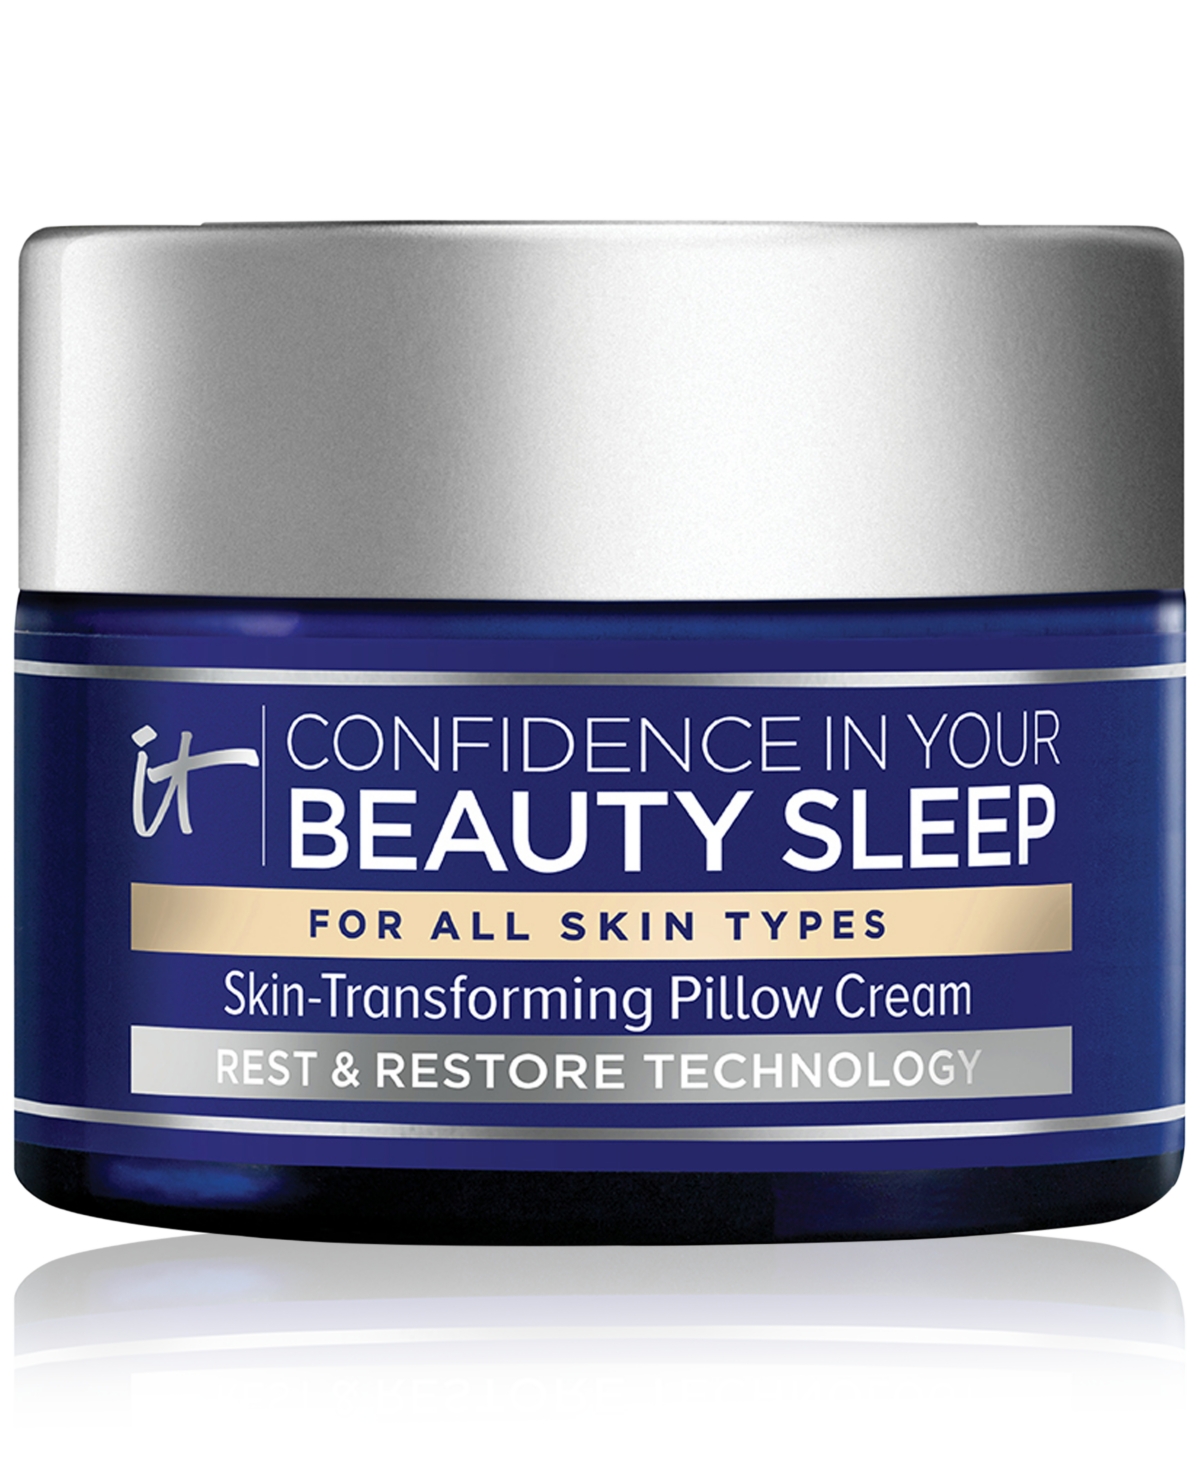 Confidence In Your Beauty Sleep Night Cream Travel Size, 0.47-oz.